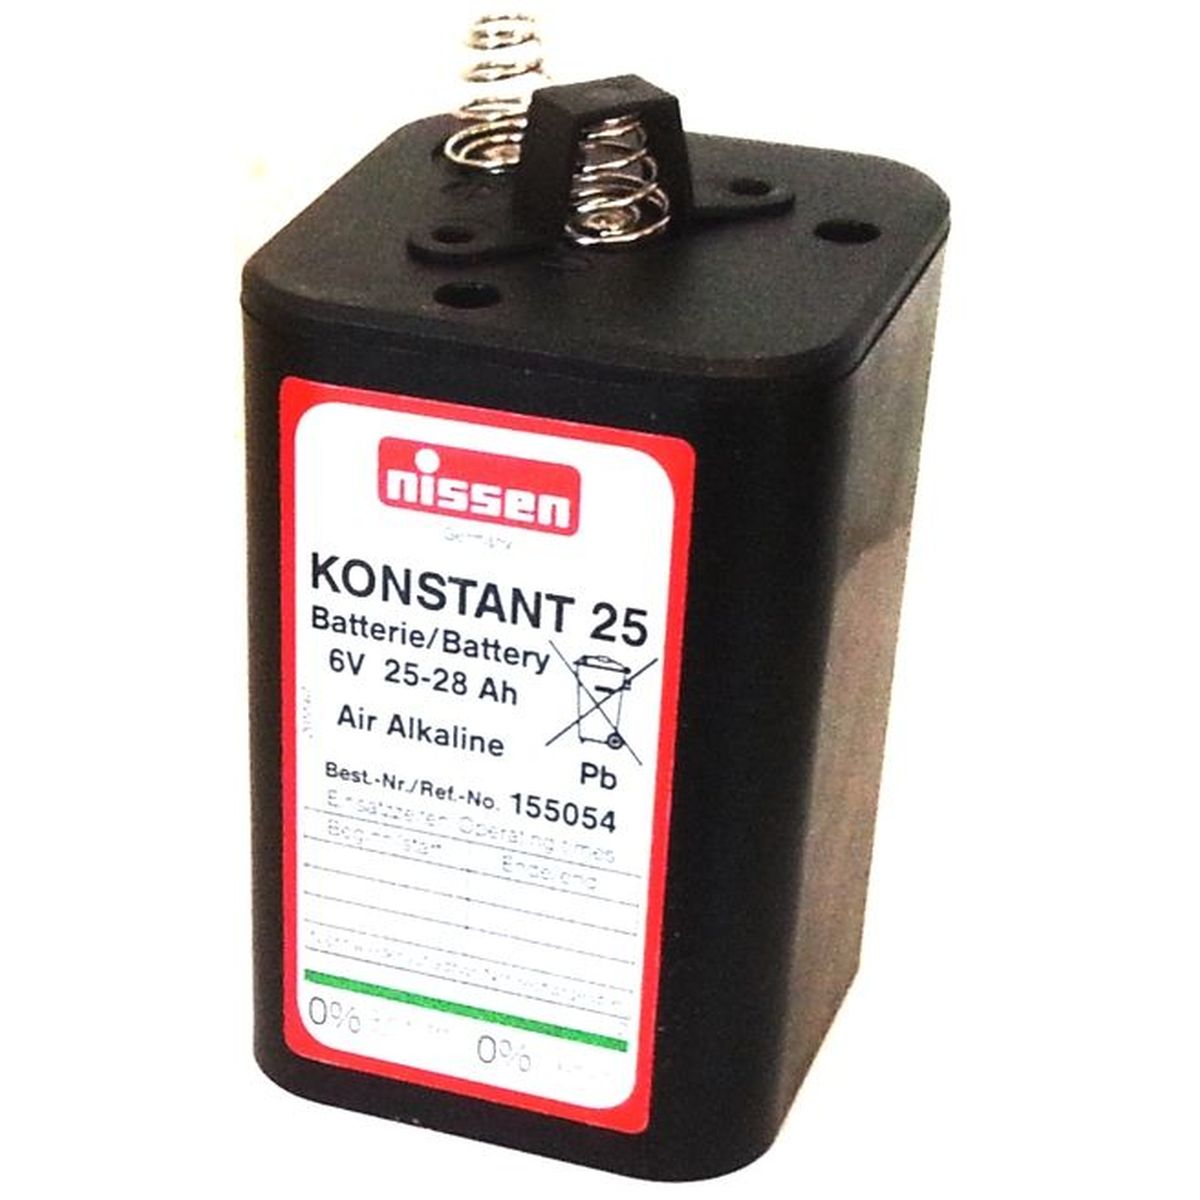 Batterie für Baustellenlampe Alkaline Nissen Konstant 25 - 6V , 25-28Ah OMC  - OnlineShop bestellen · kaufen · informieren